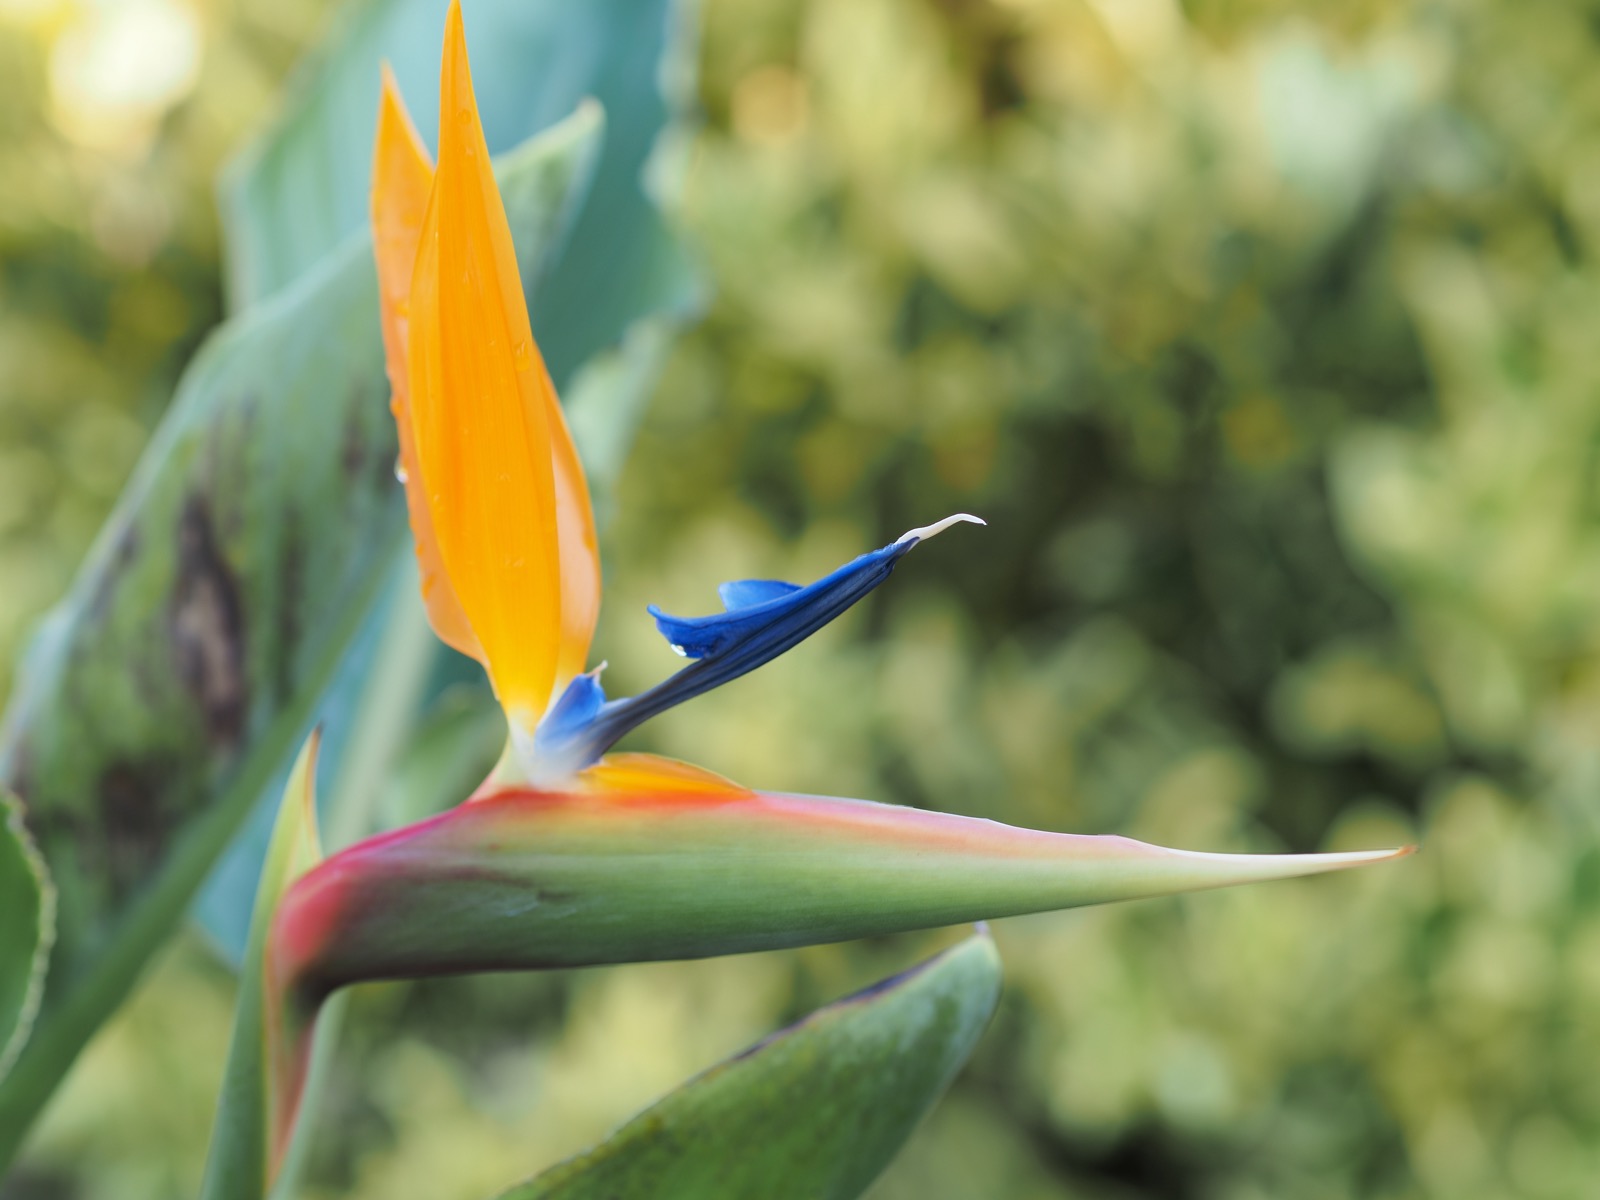 Closeup telephoto image of a newly-opened bird of paradise flower